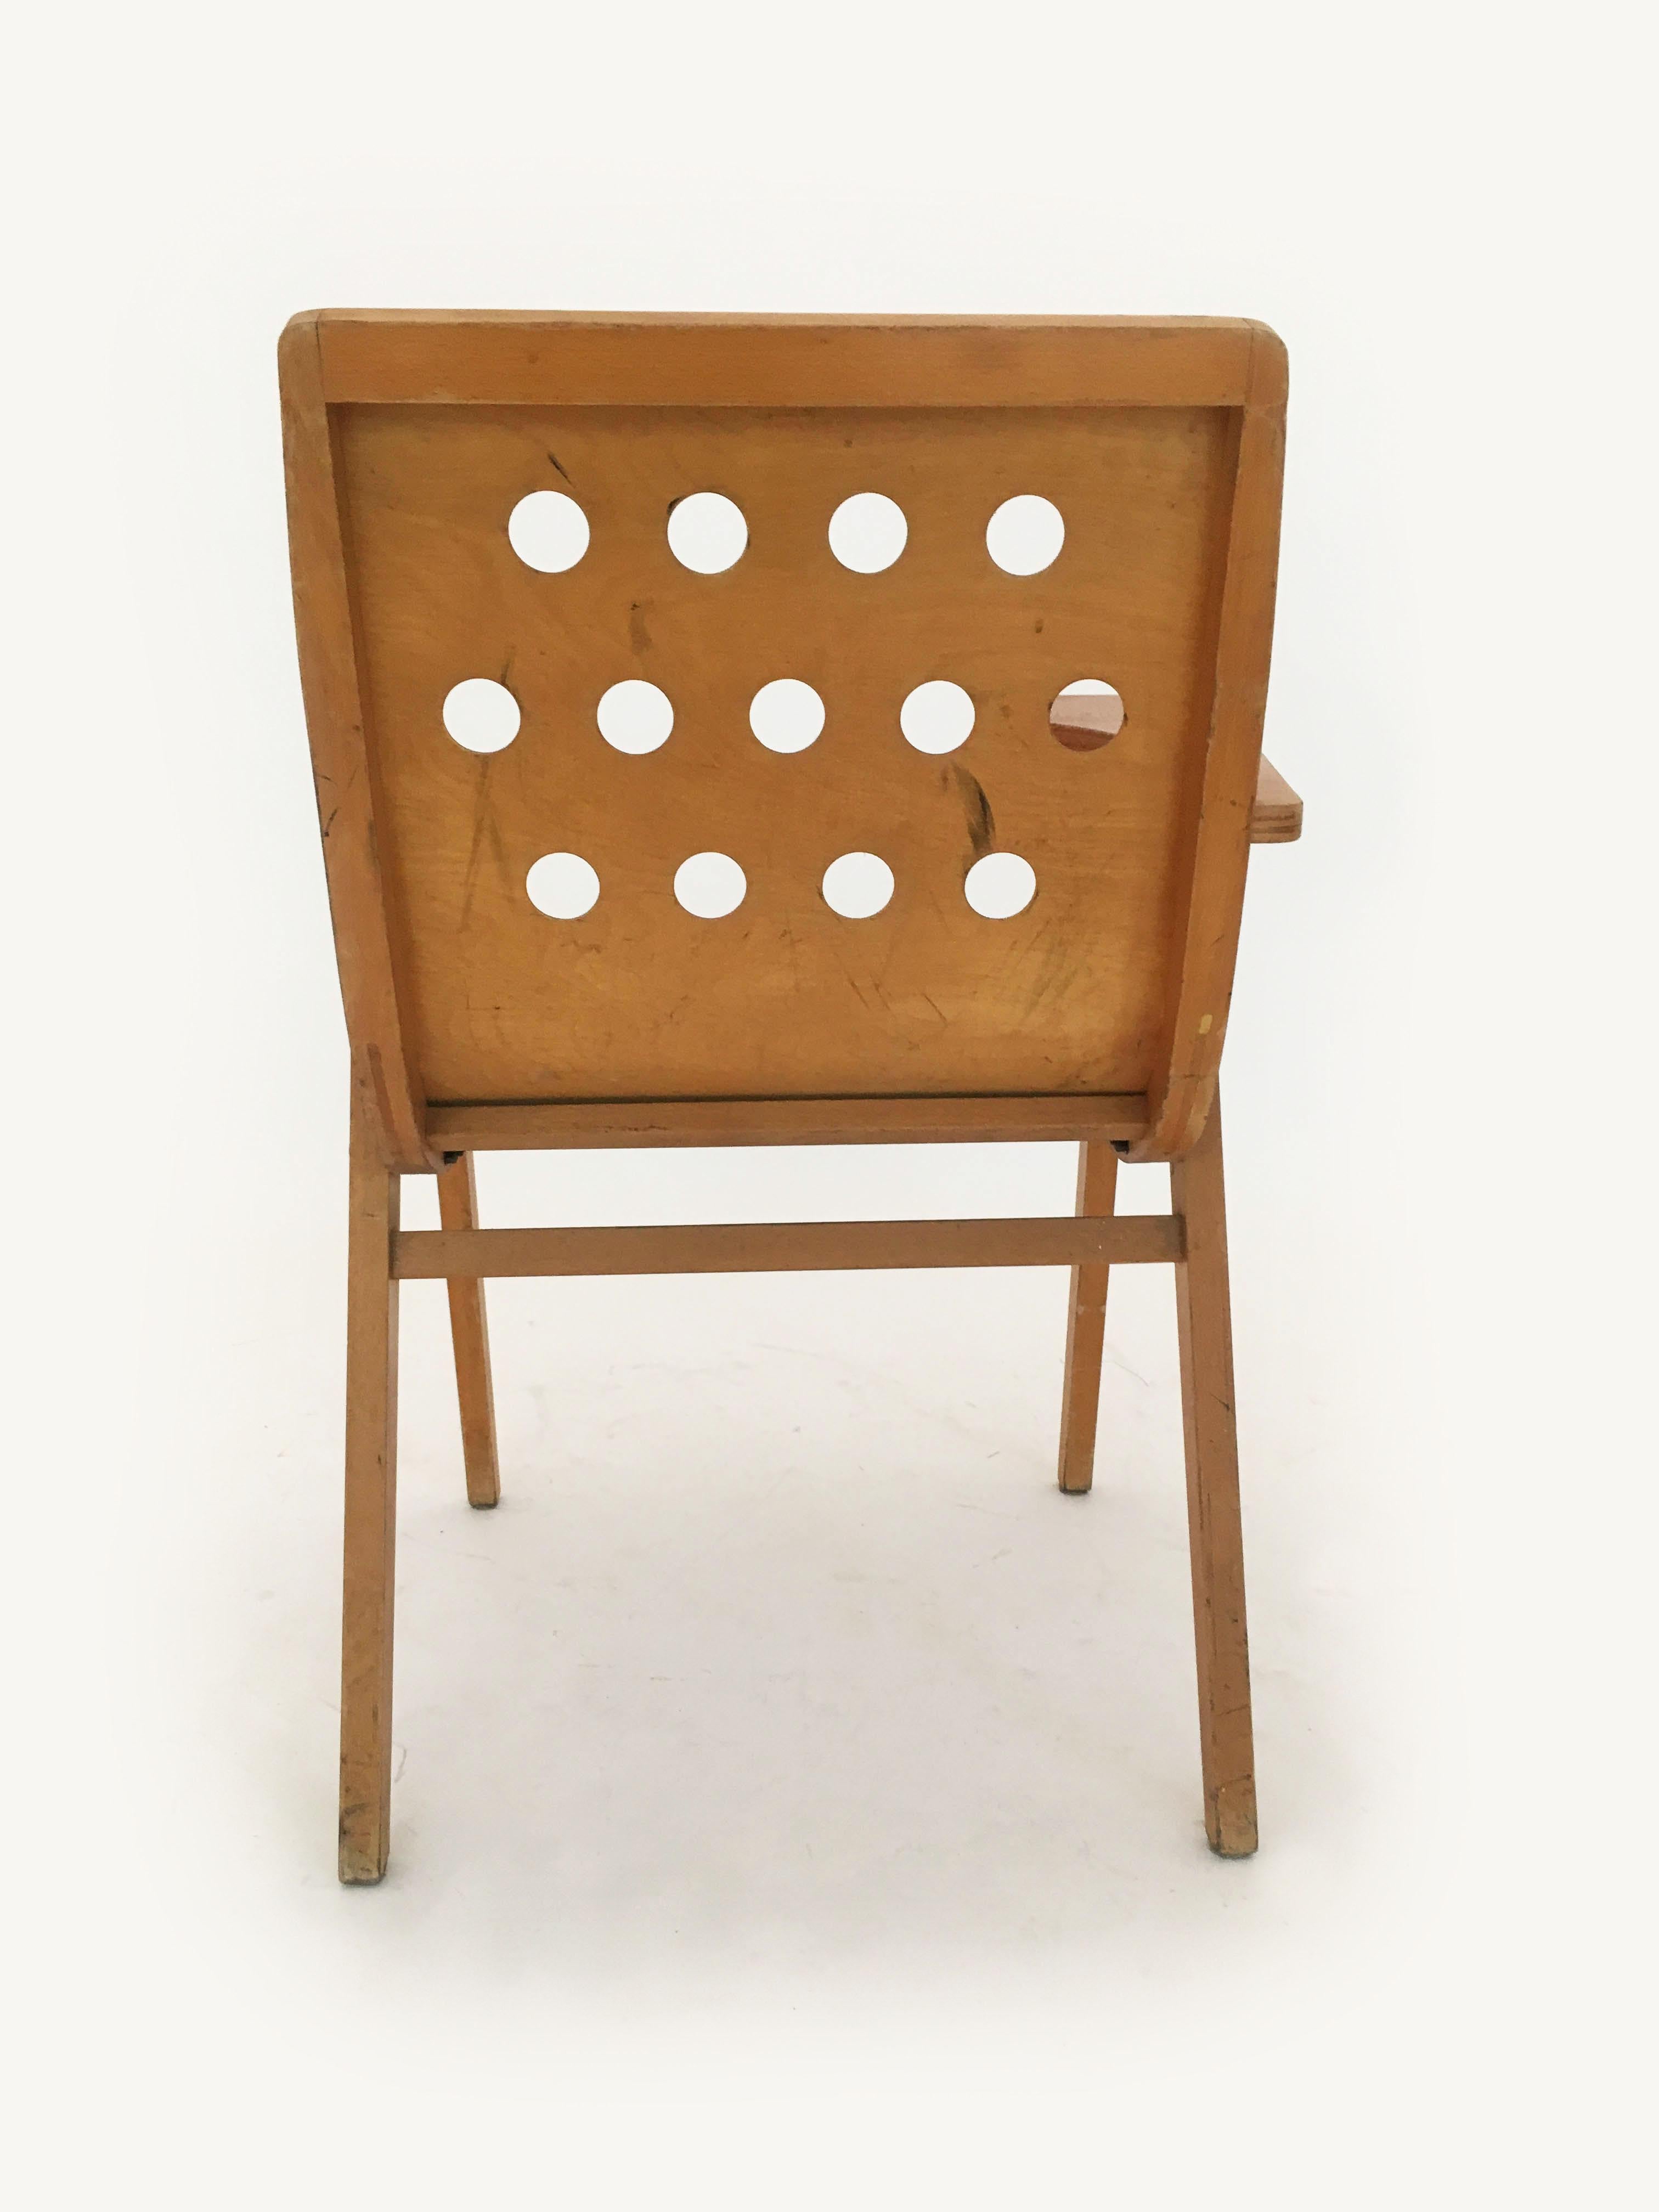 Beech Roland Rainer Stadthallen Chair with Writing Desk, Austria, 1950s For Sale